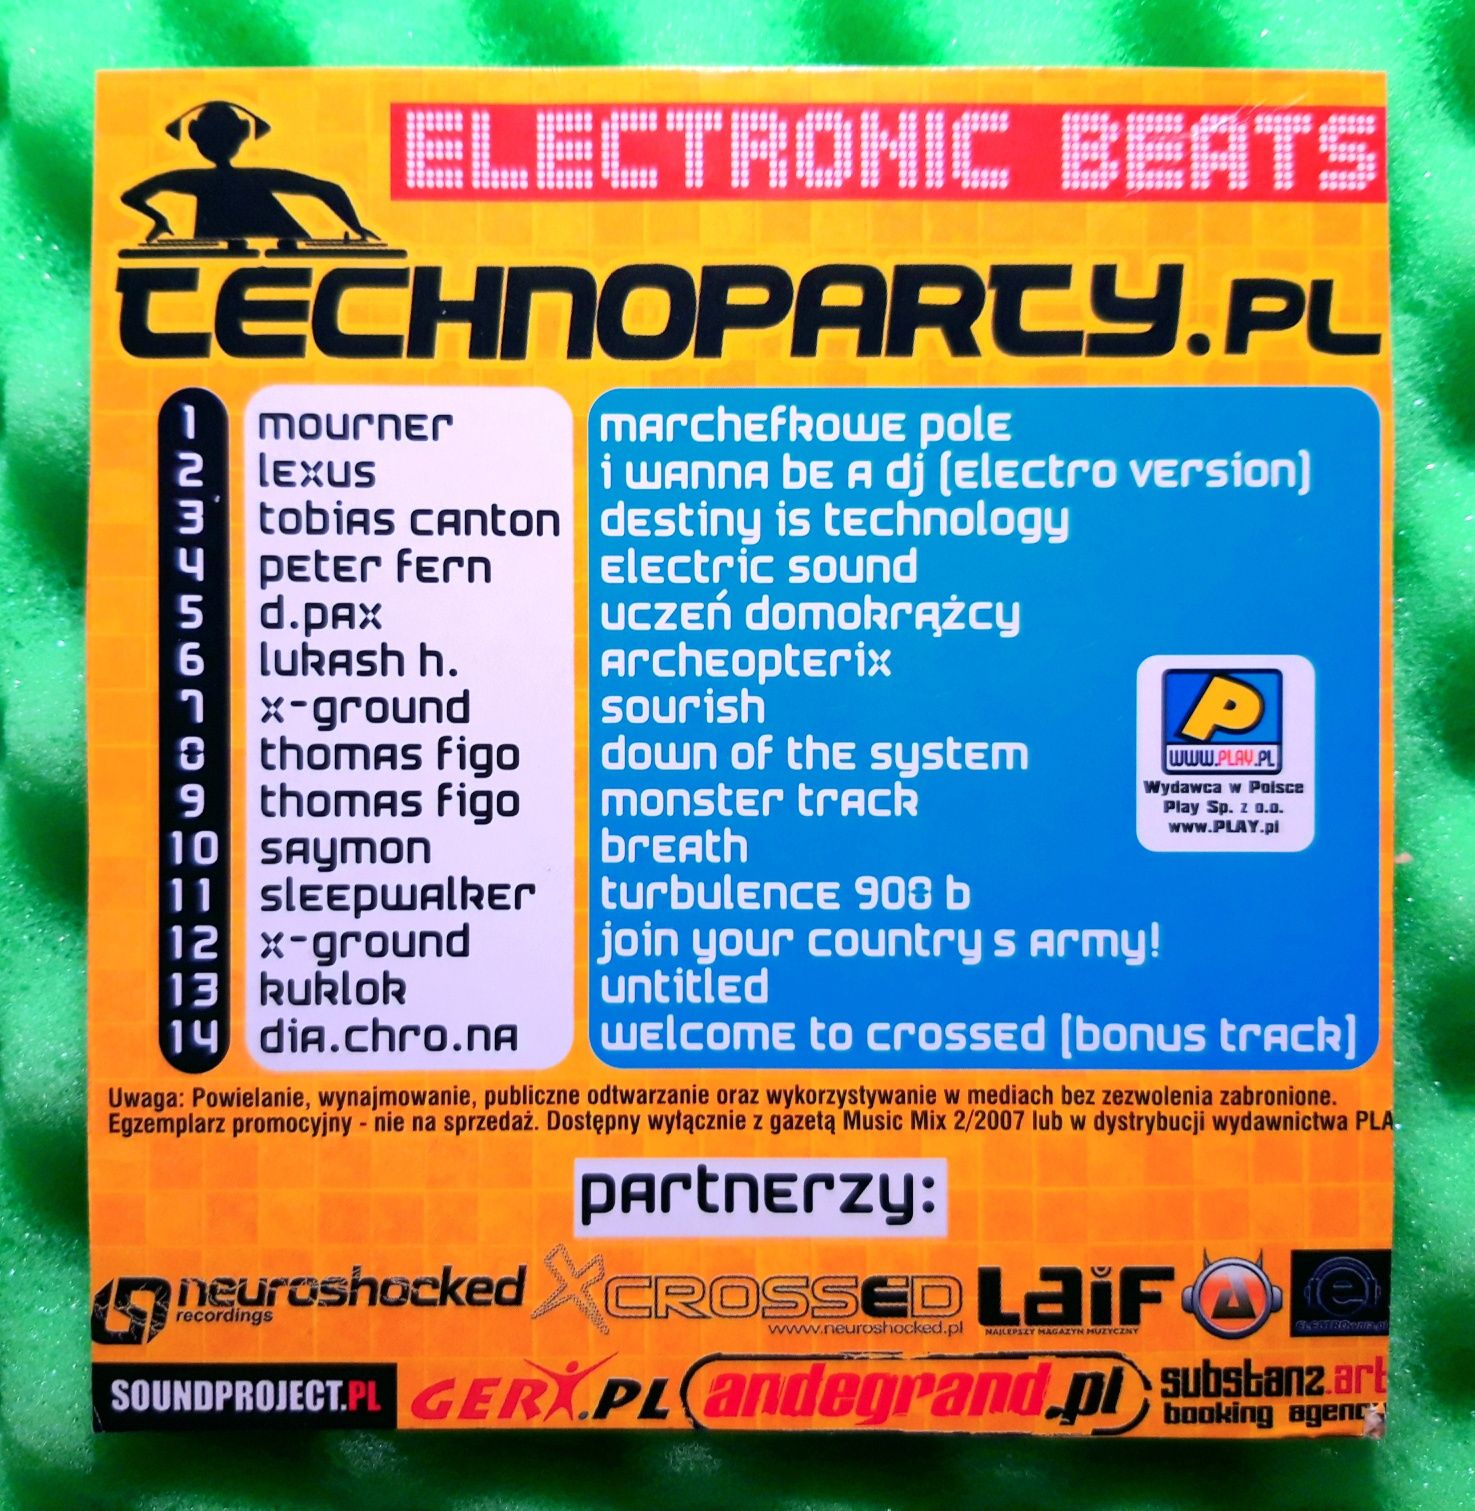 TechnoParty - Electronic Beats (CD, 2007)